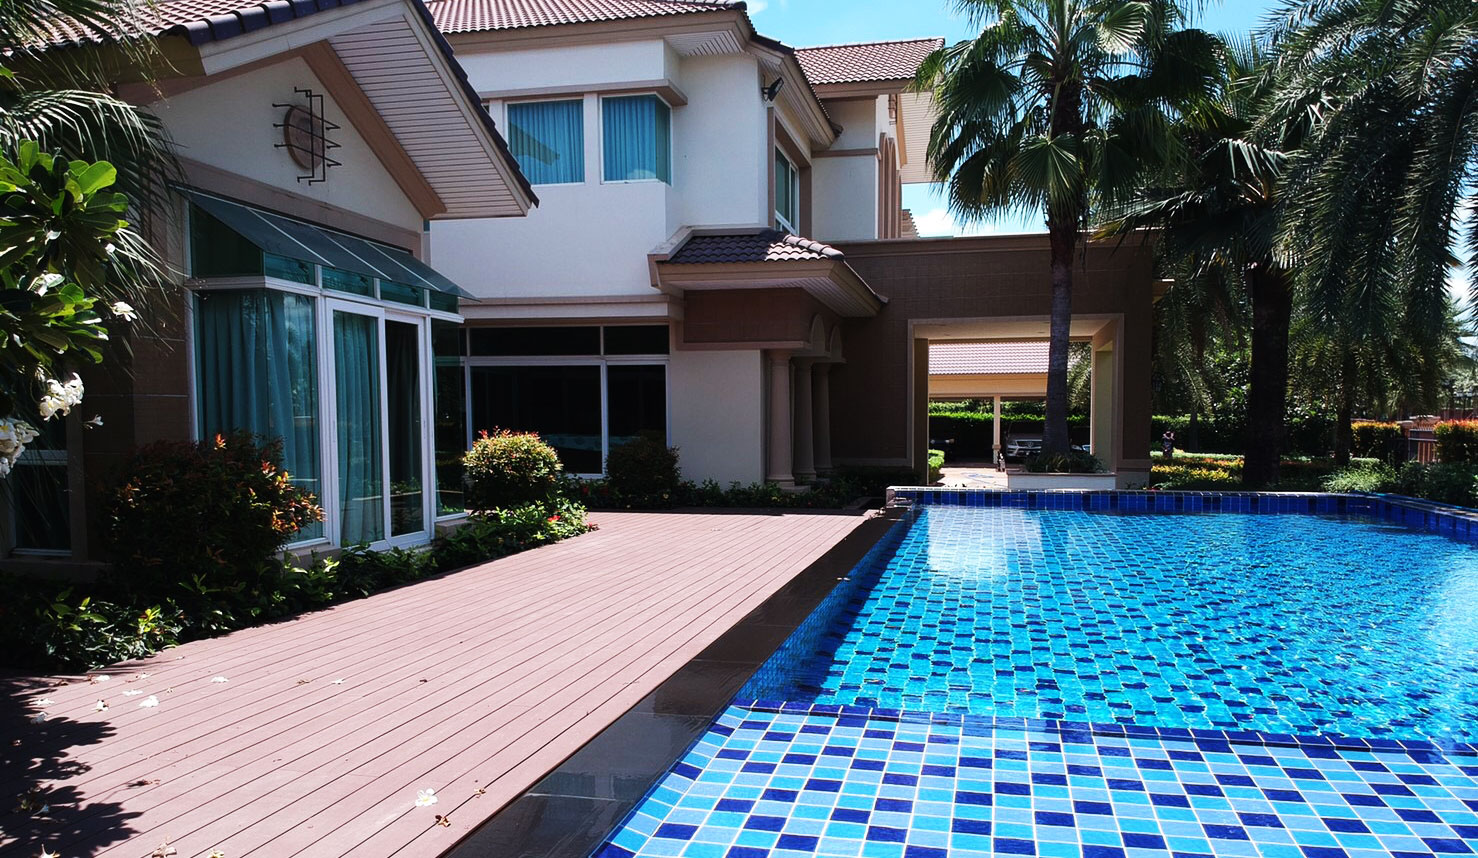 Composite Decking For A Large Pool Terrace In Bangkok Thai Garden Design